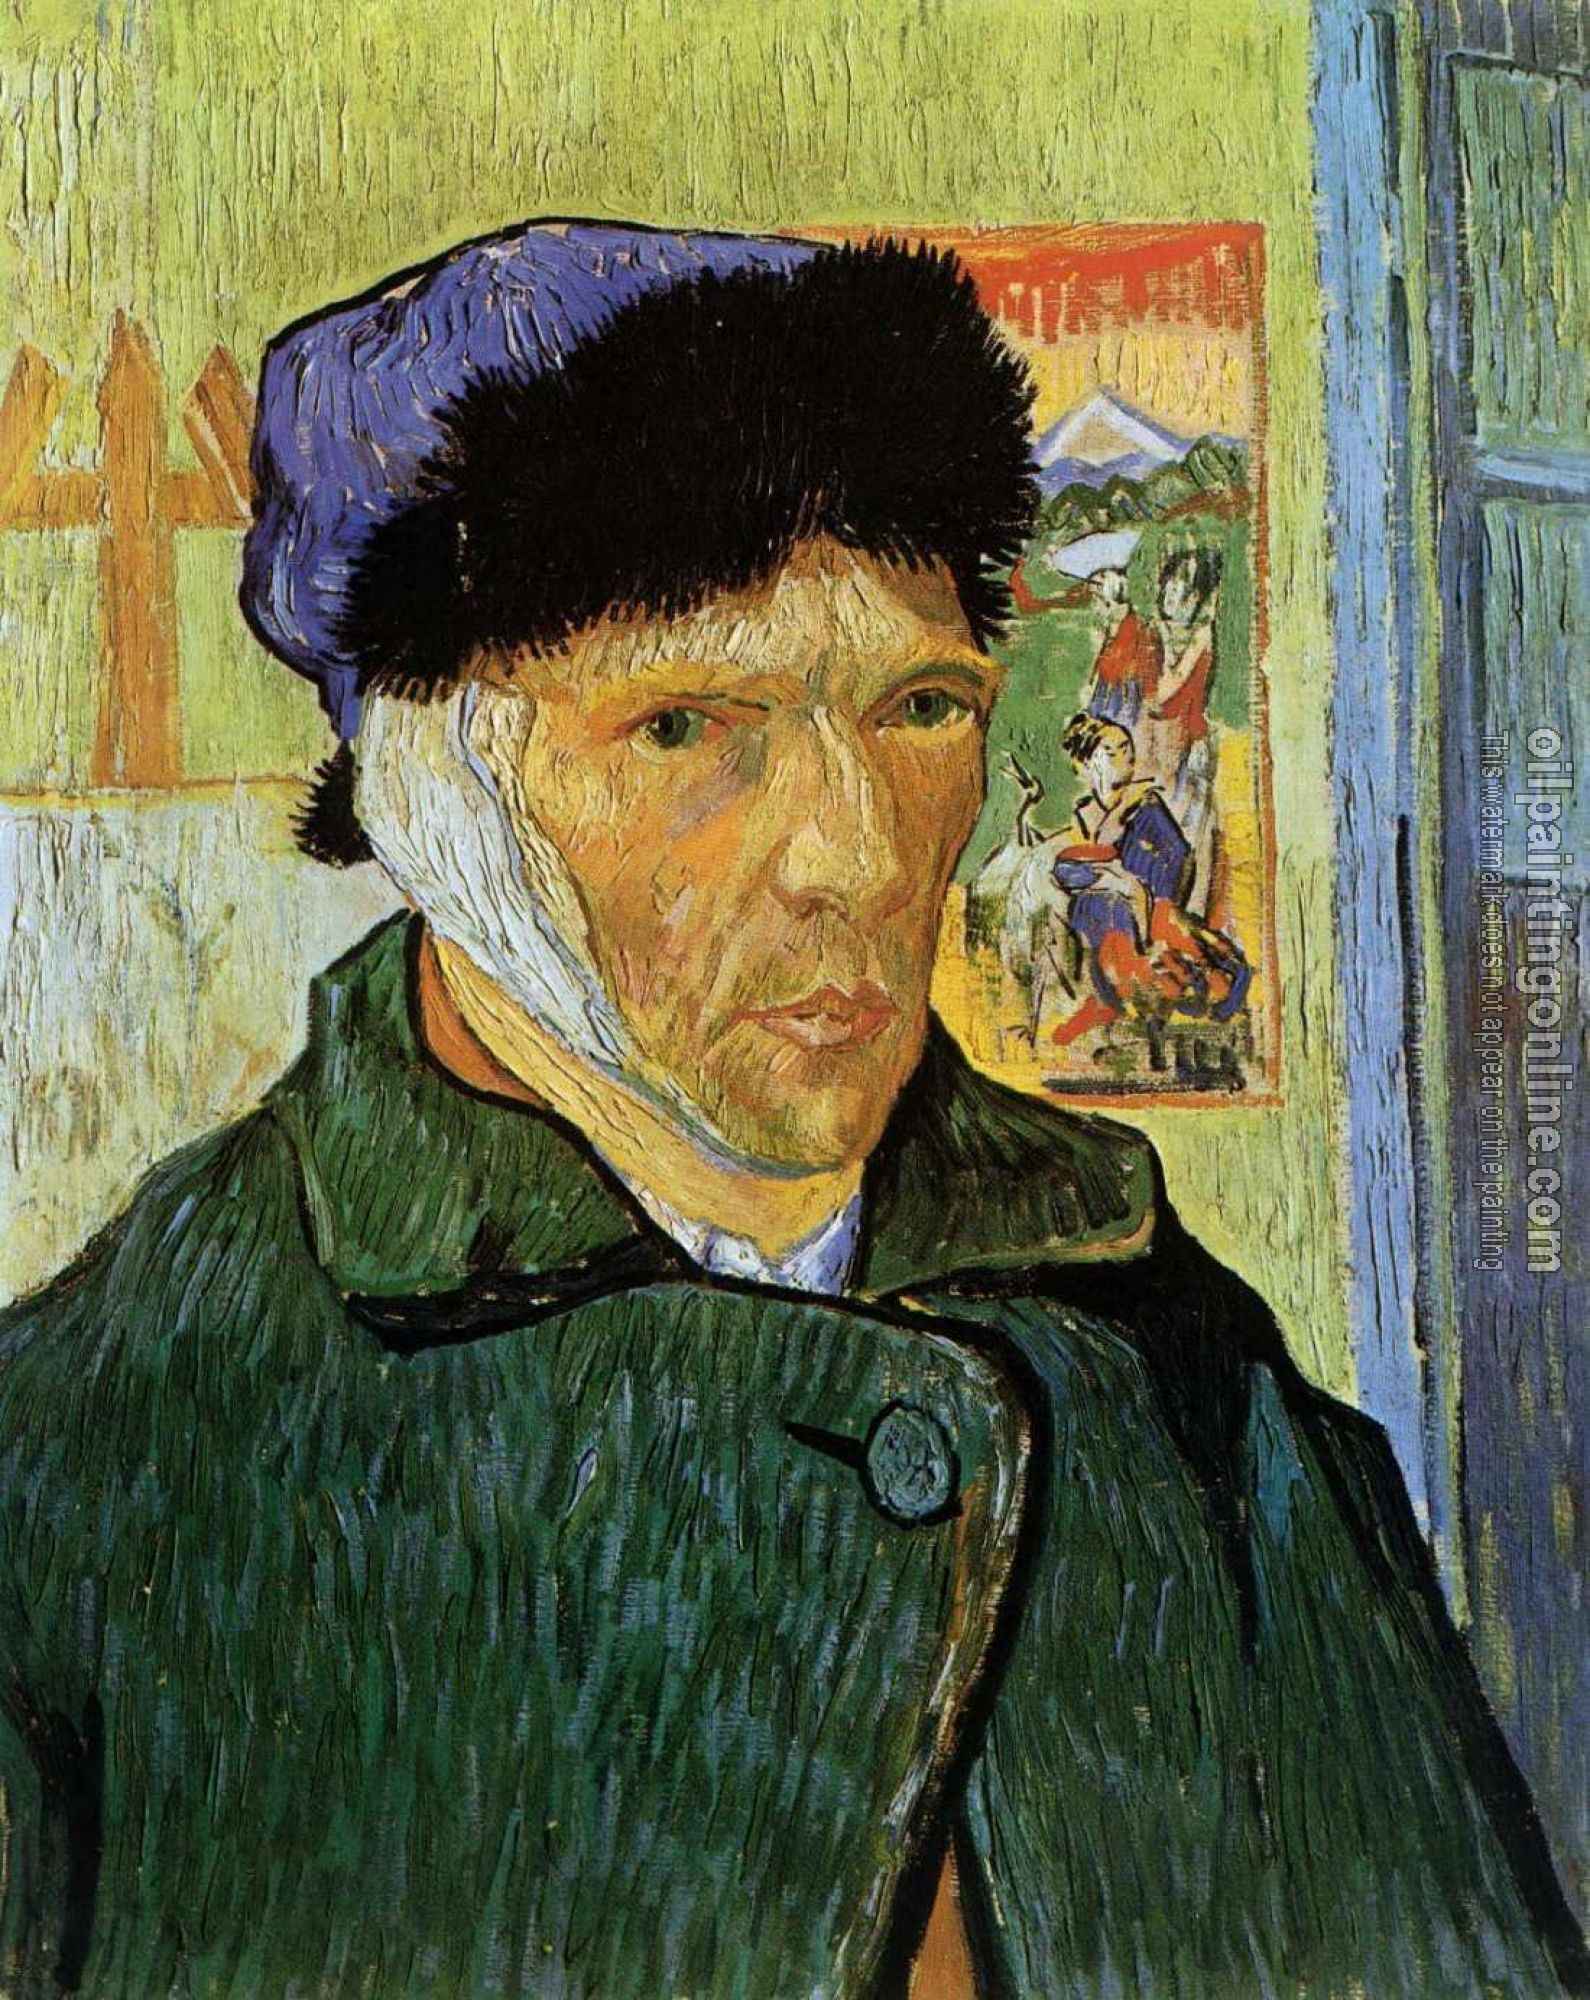 Gogh, Vincent van - Self Portrait with Badaged Ear